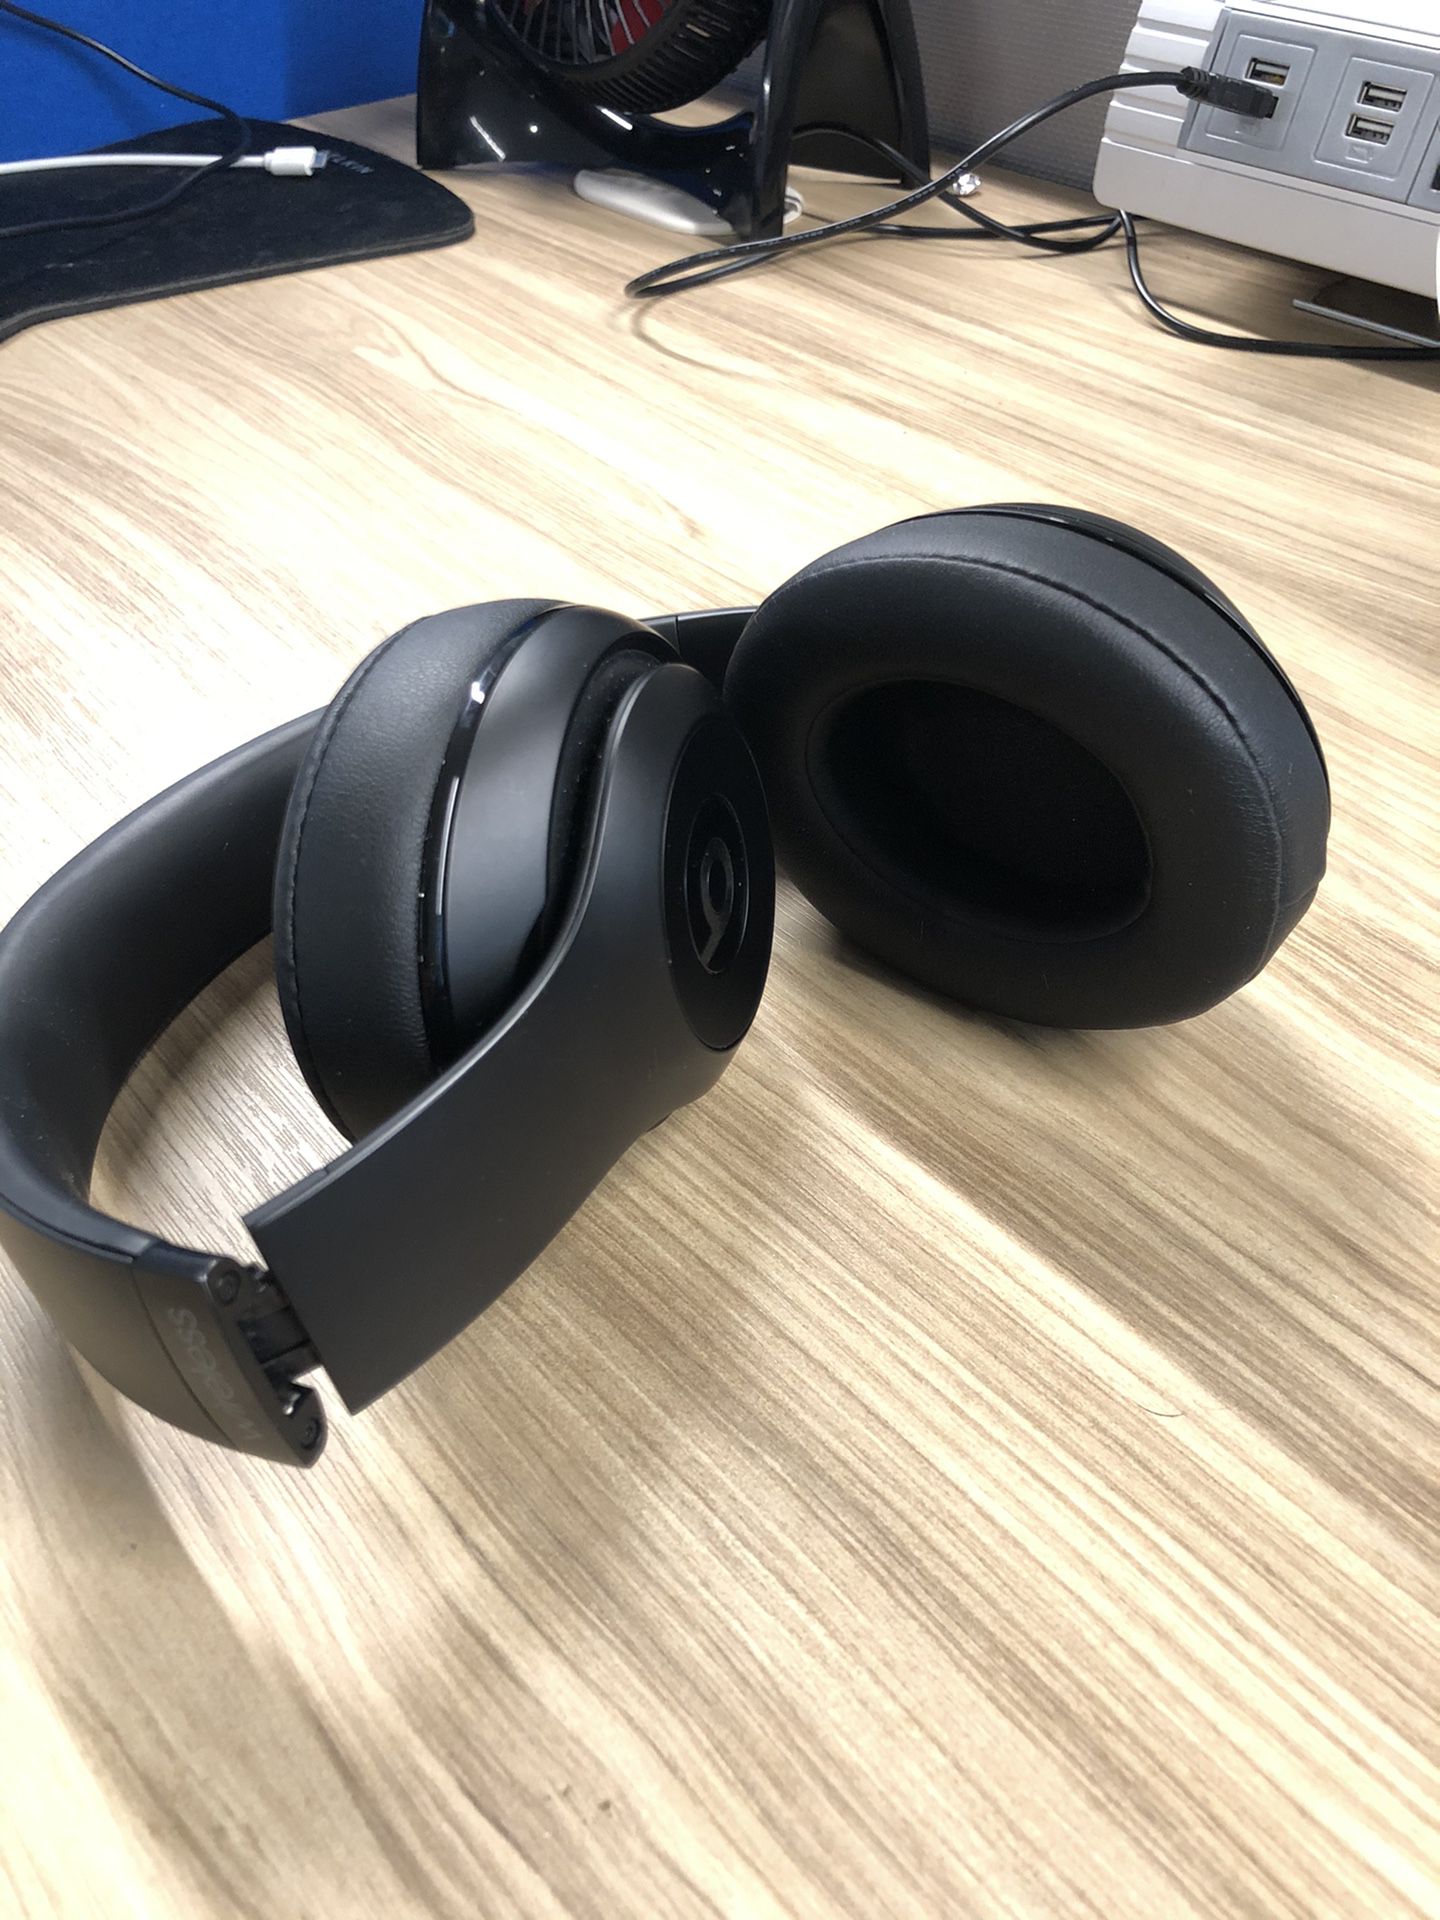 Beats Wireless Studio 2.0 noise cancellation headphones